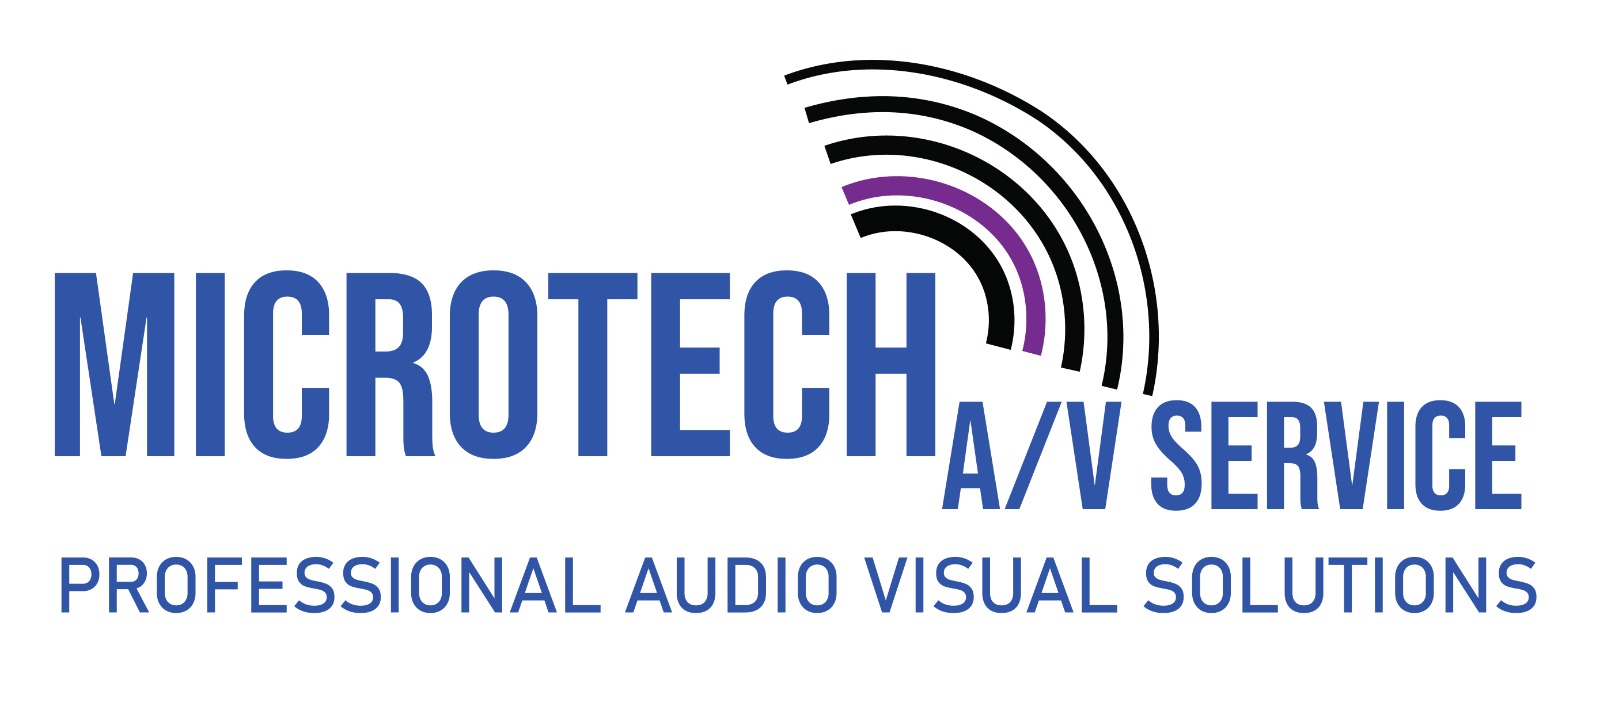 Microtech Av Service